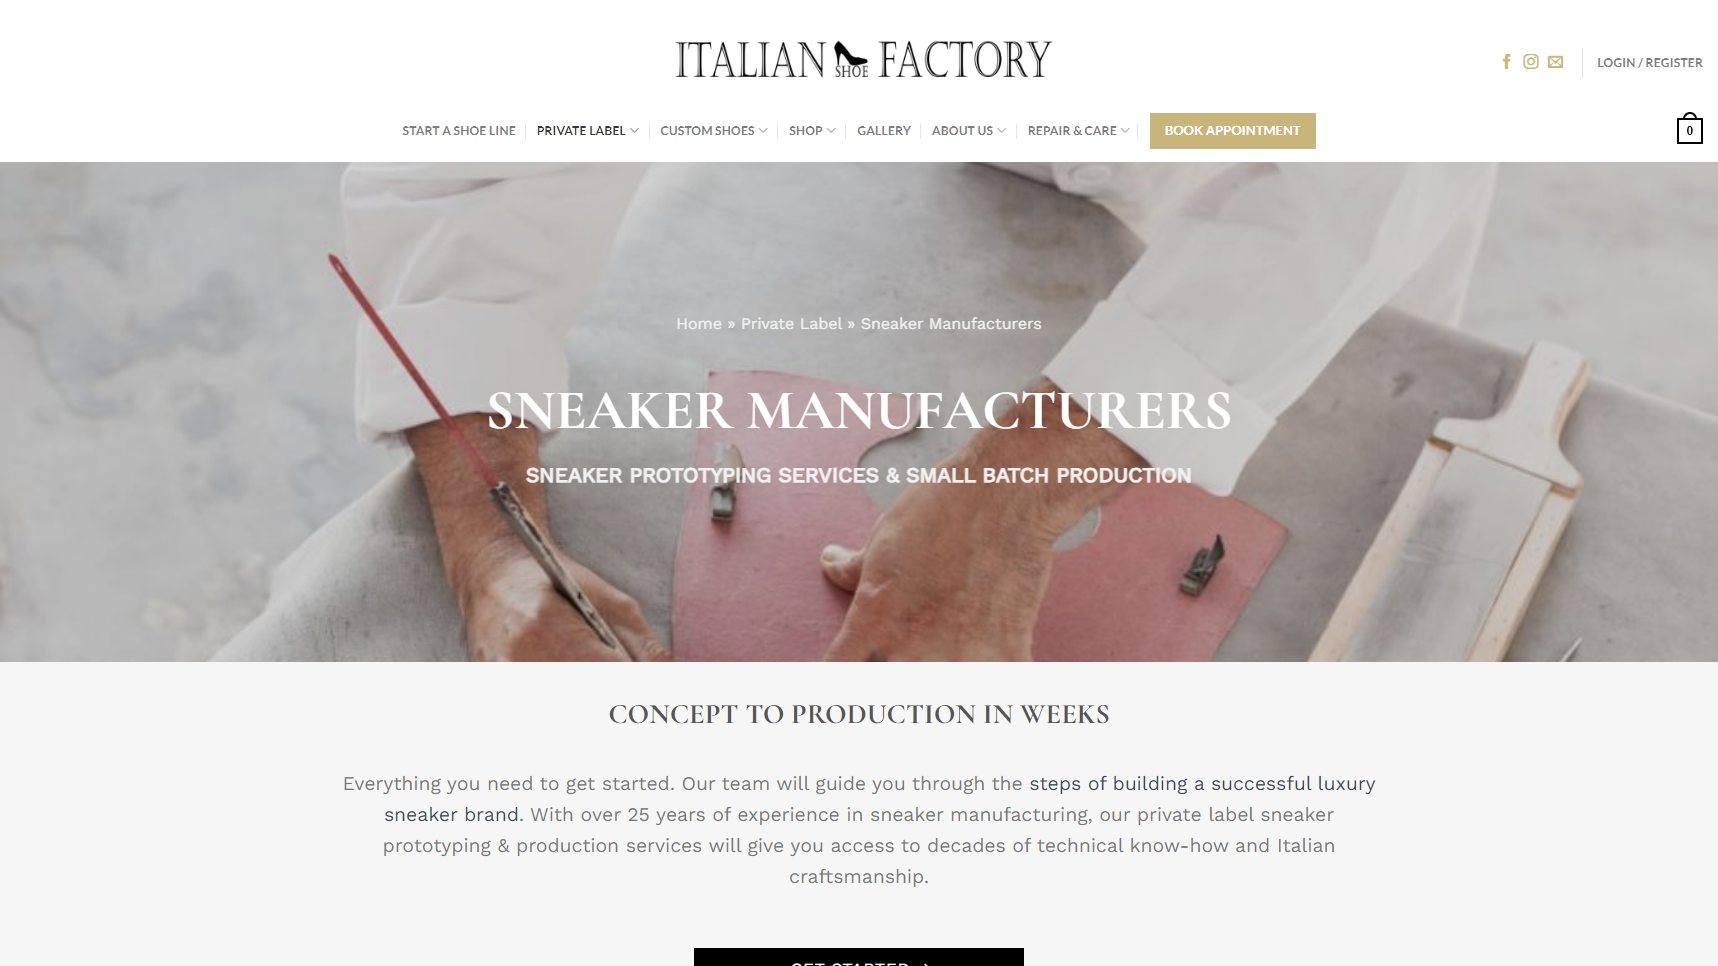 Italian Shoe Factory - Sneaker Manufacturer